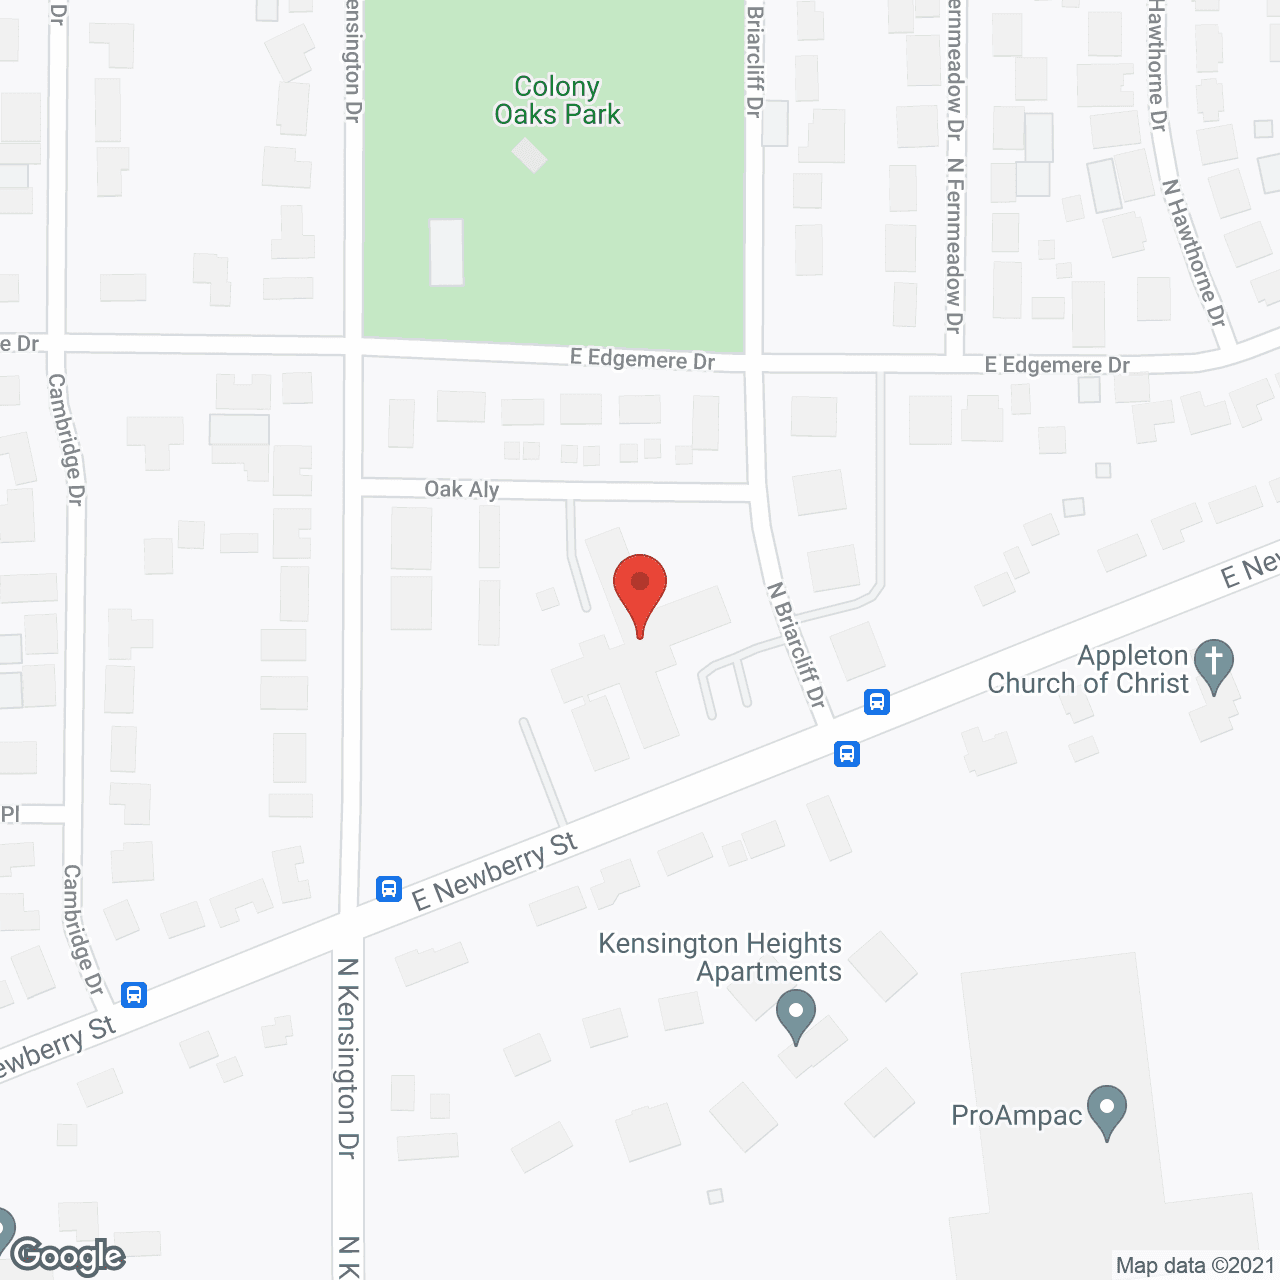 Colony Oaks Care Center in google map